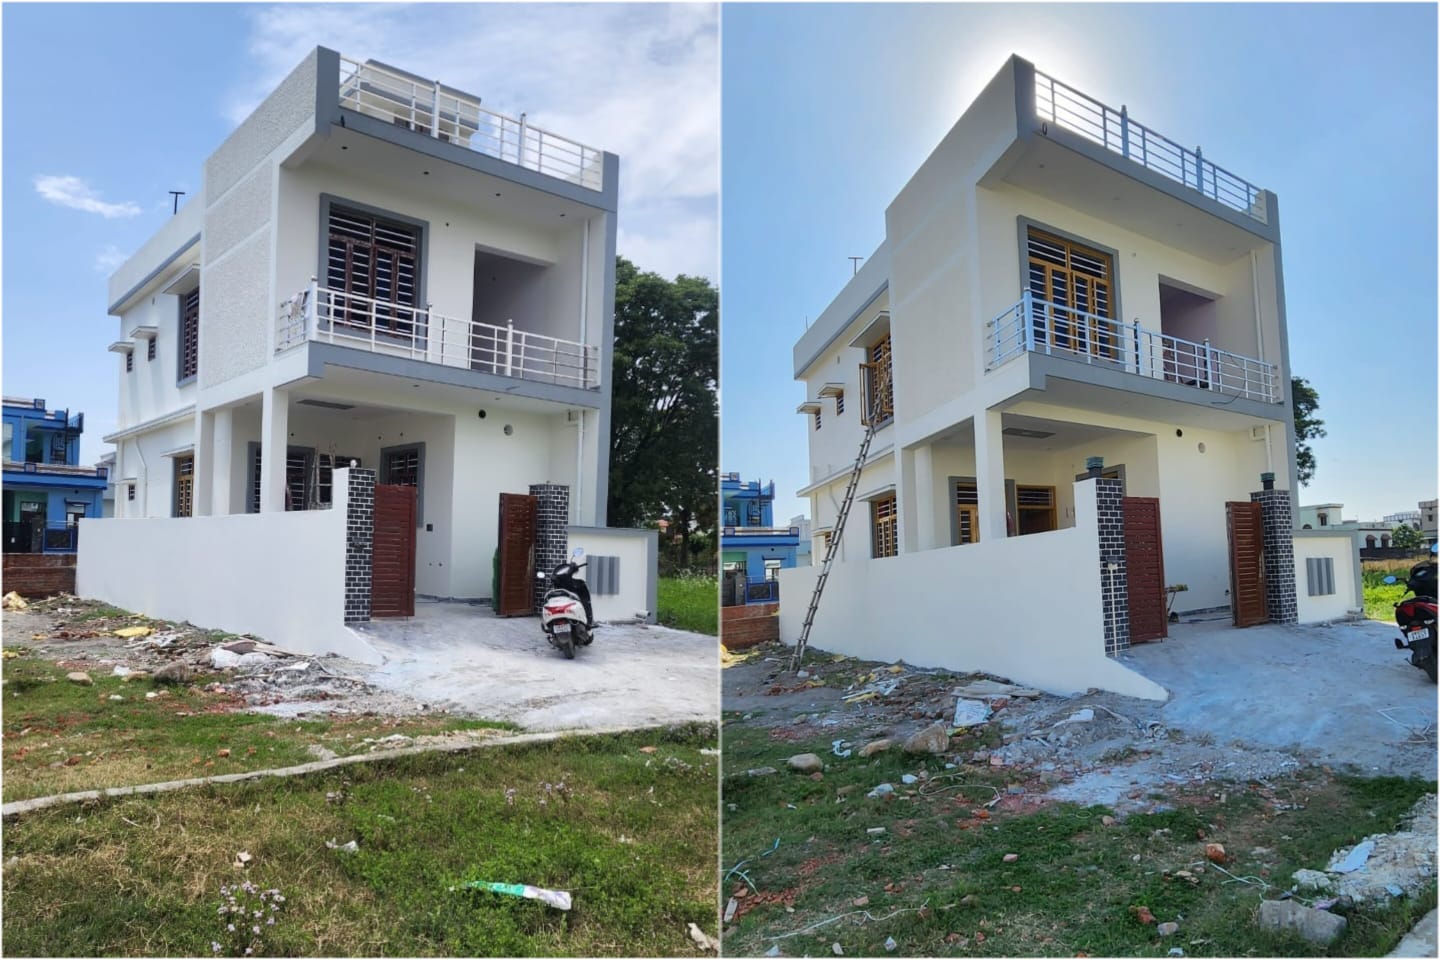 Duplex 3BHK House For Sale In Balawala